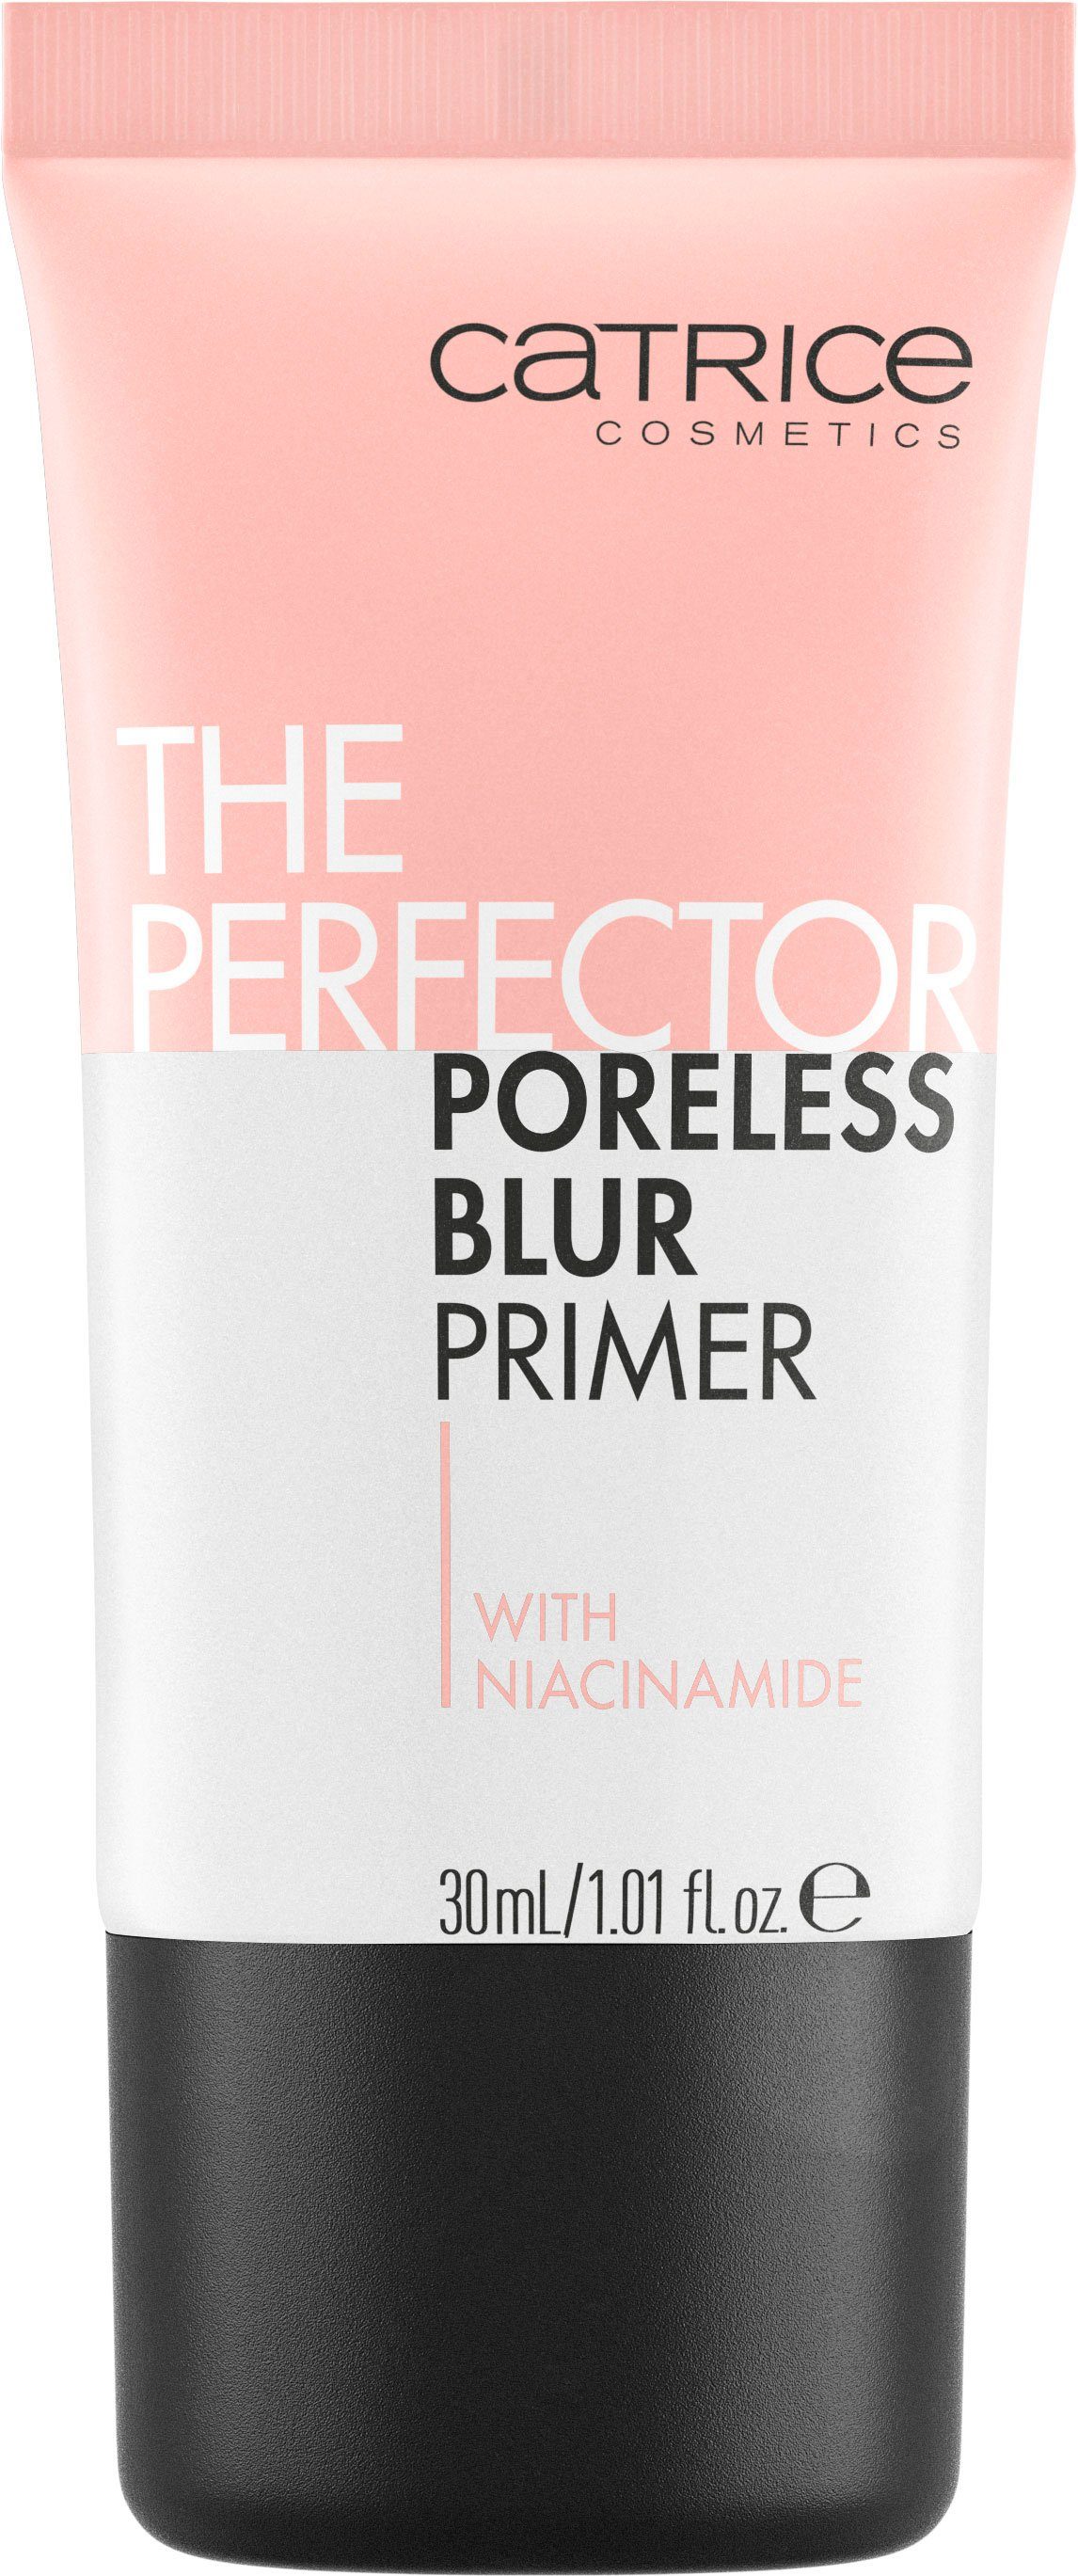 Blur Primer, Poreless Catrice Perfector The Primer 3-tlg.